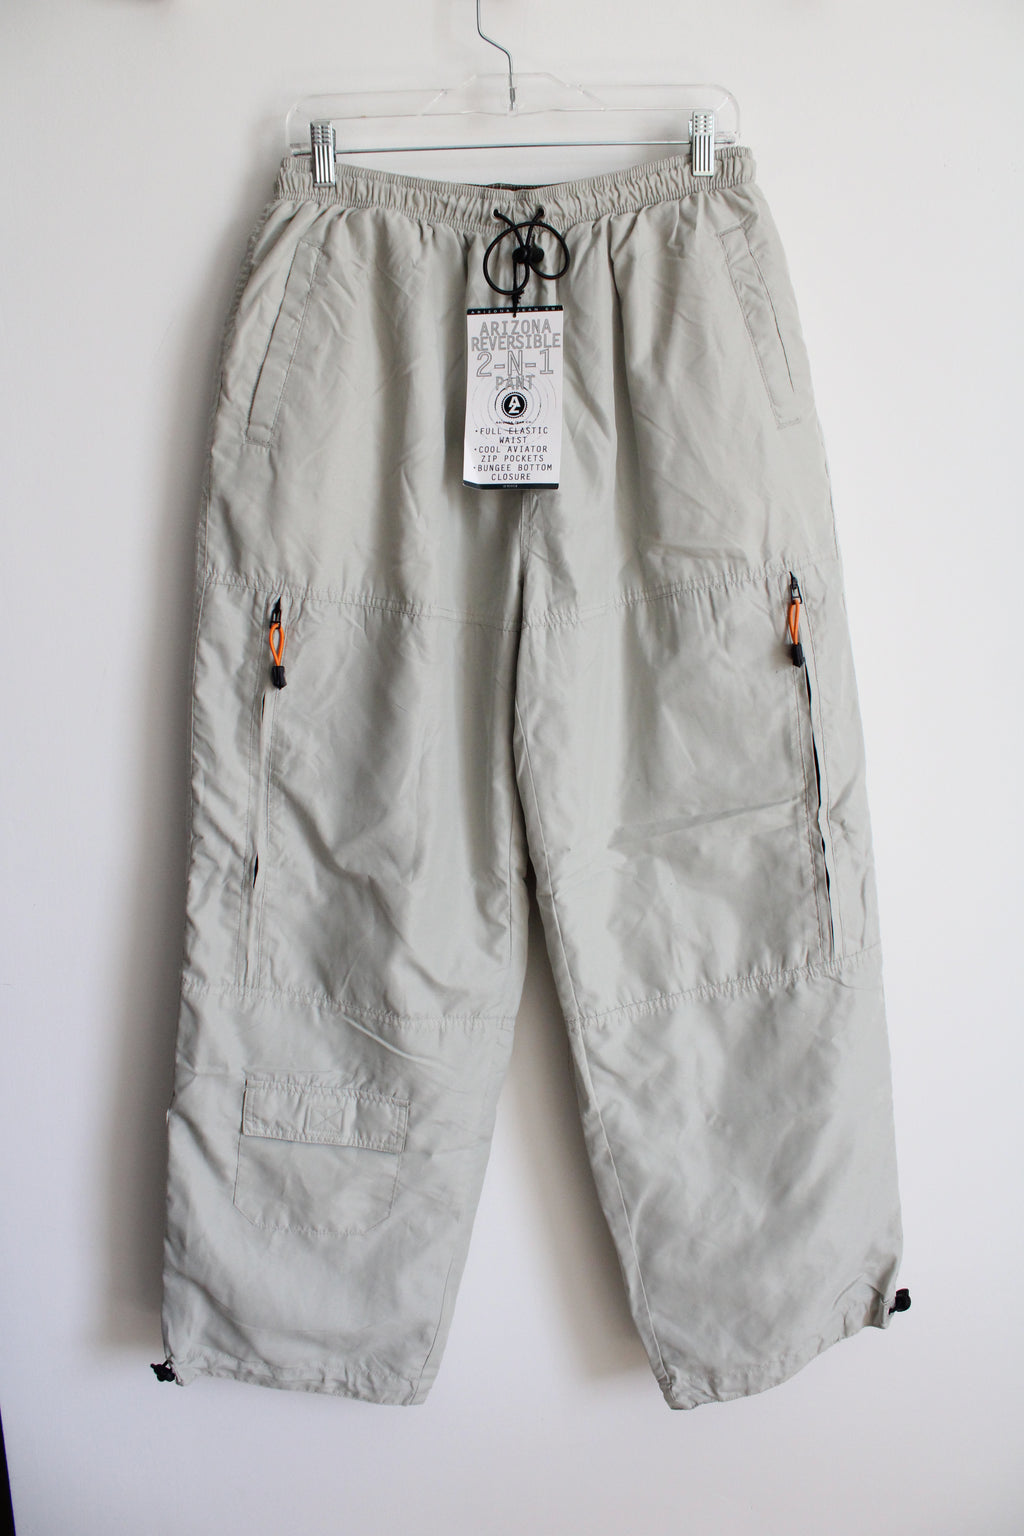 NEW Arizona Jean Co. Green Reversable Outdoor Wear Pant | L